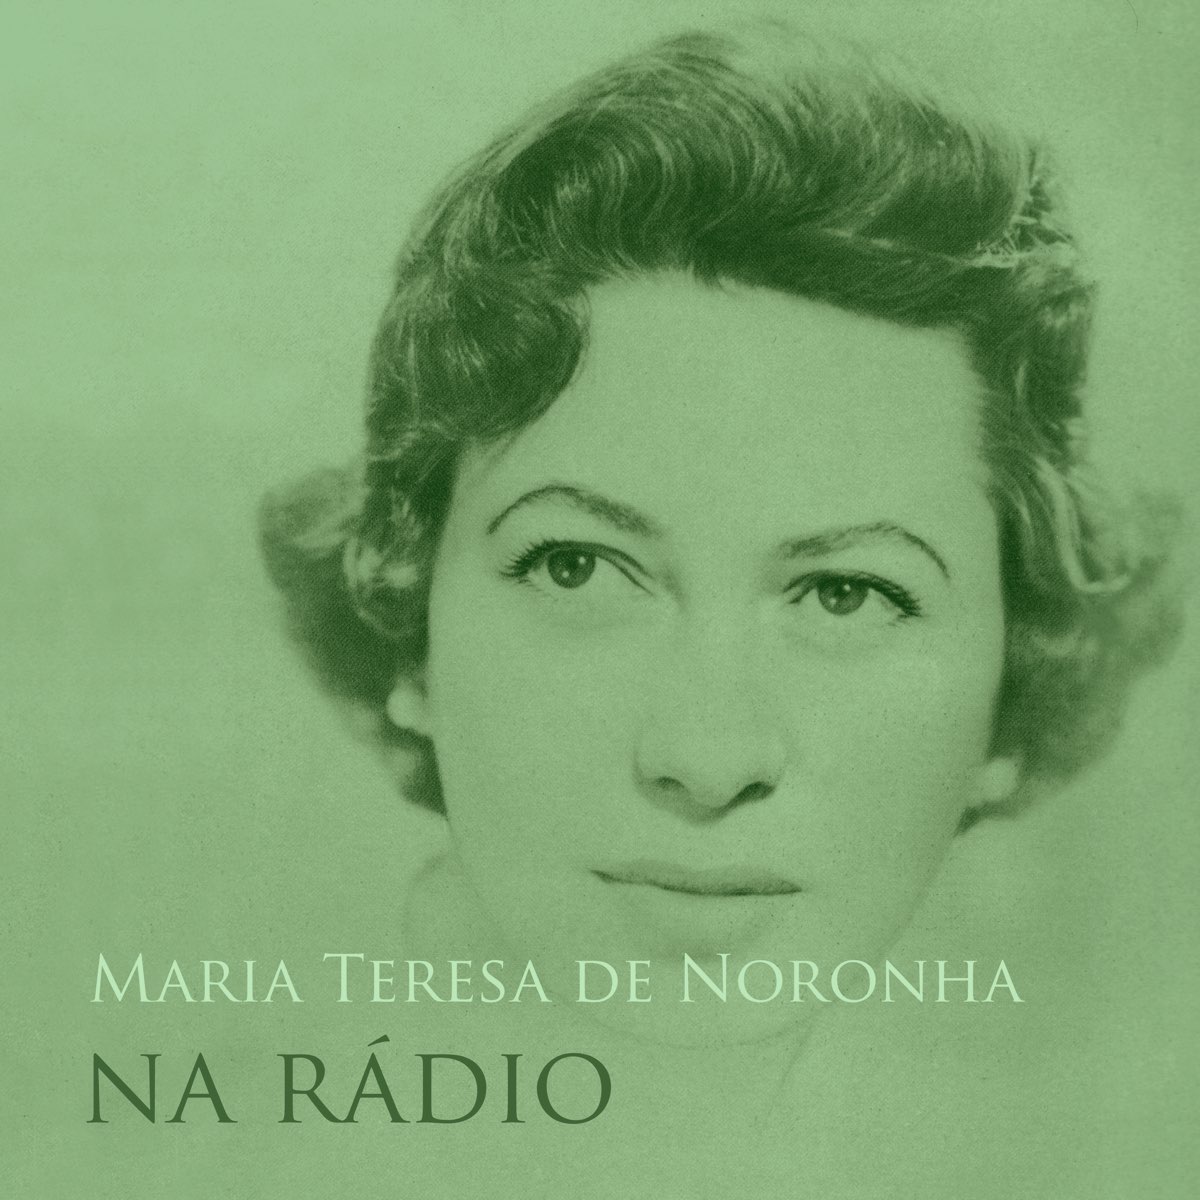 Teresa Maria текст песни.